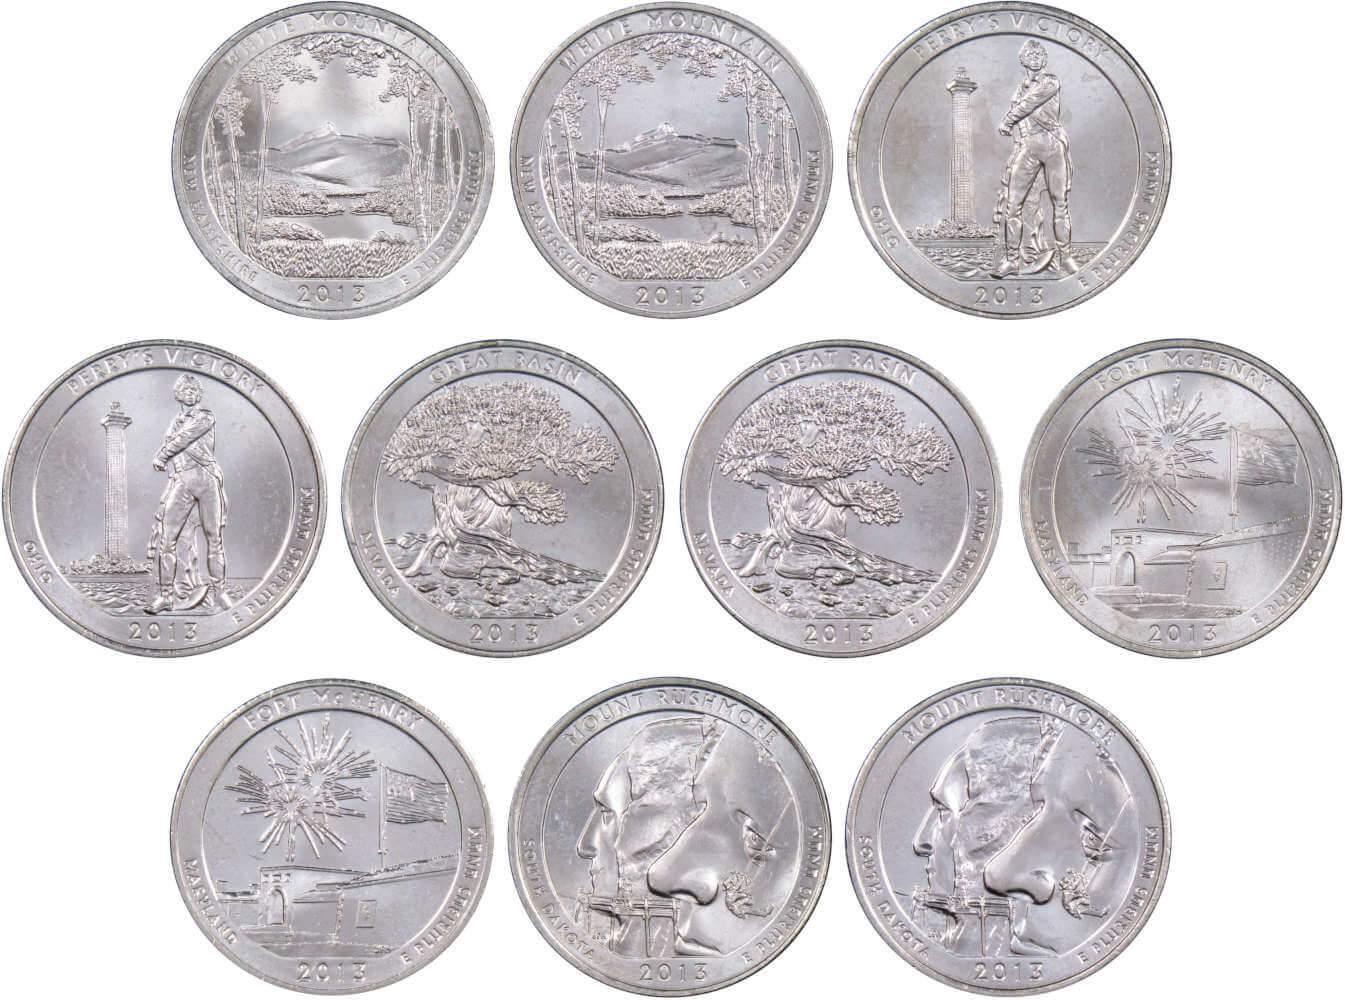 2013 P&D National Park Quarter 10 Coin Set Uncirculated Mint State 25c